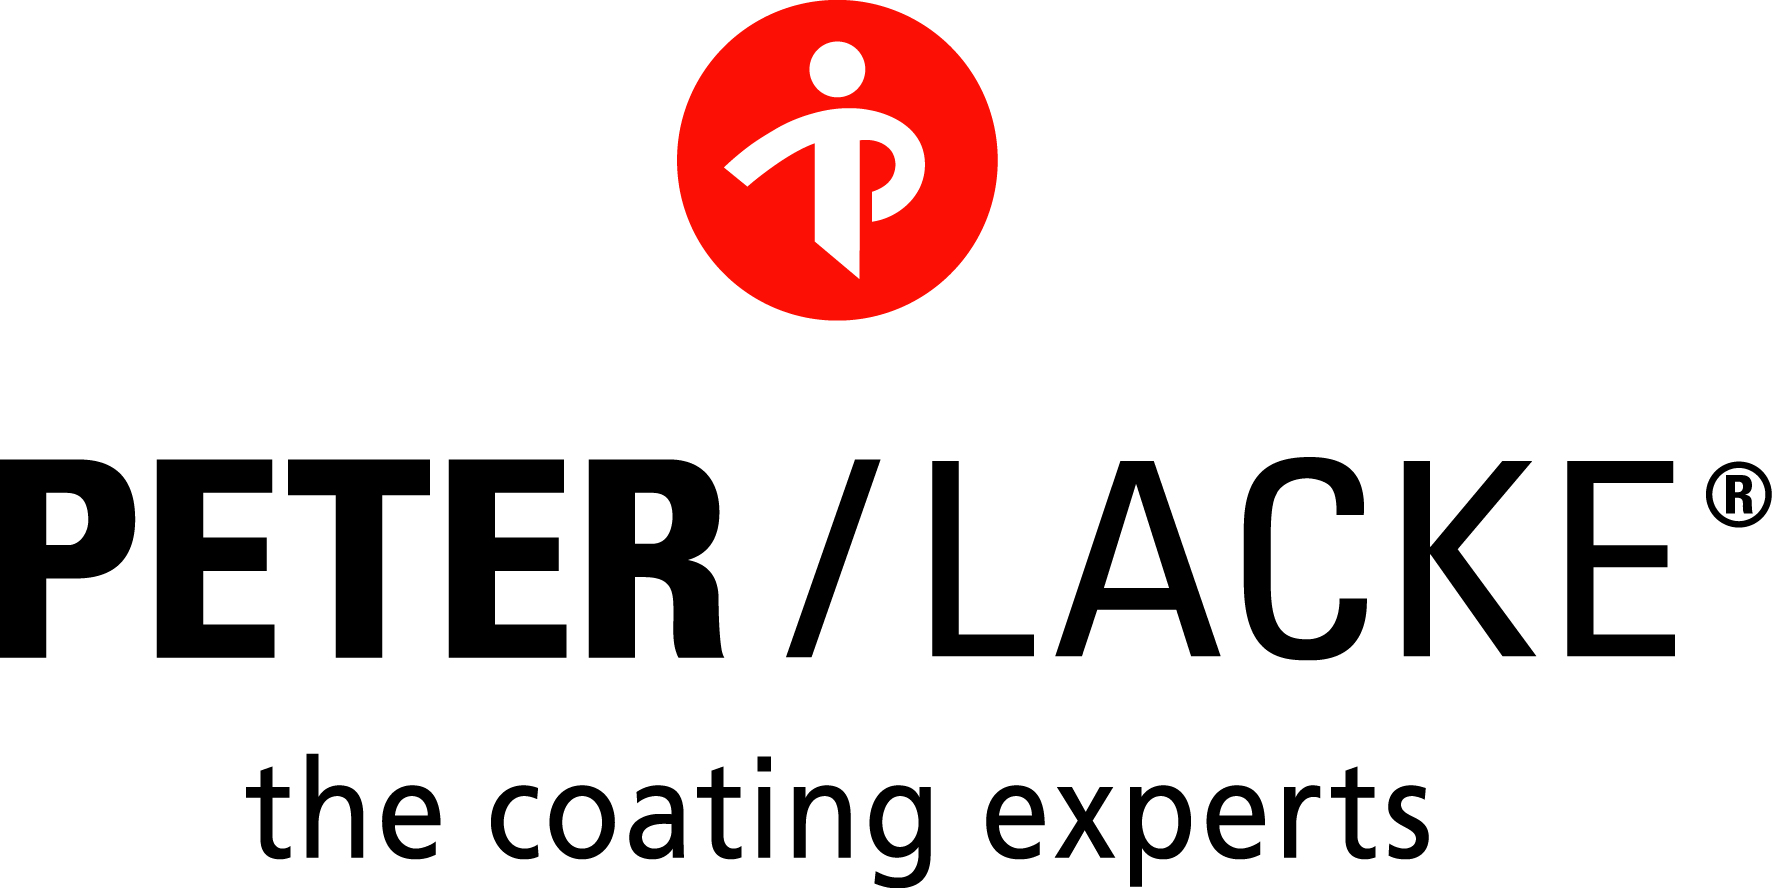 PETER/LACKE Holding GmbH